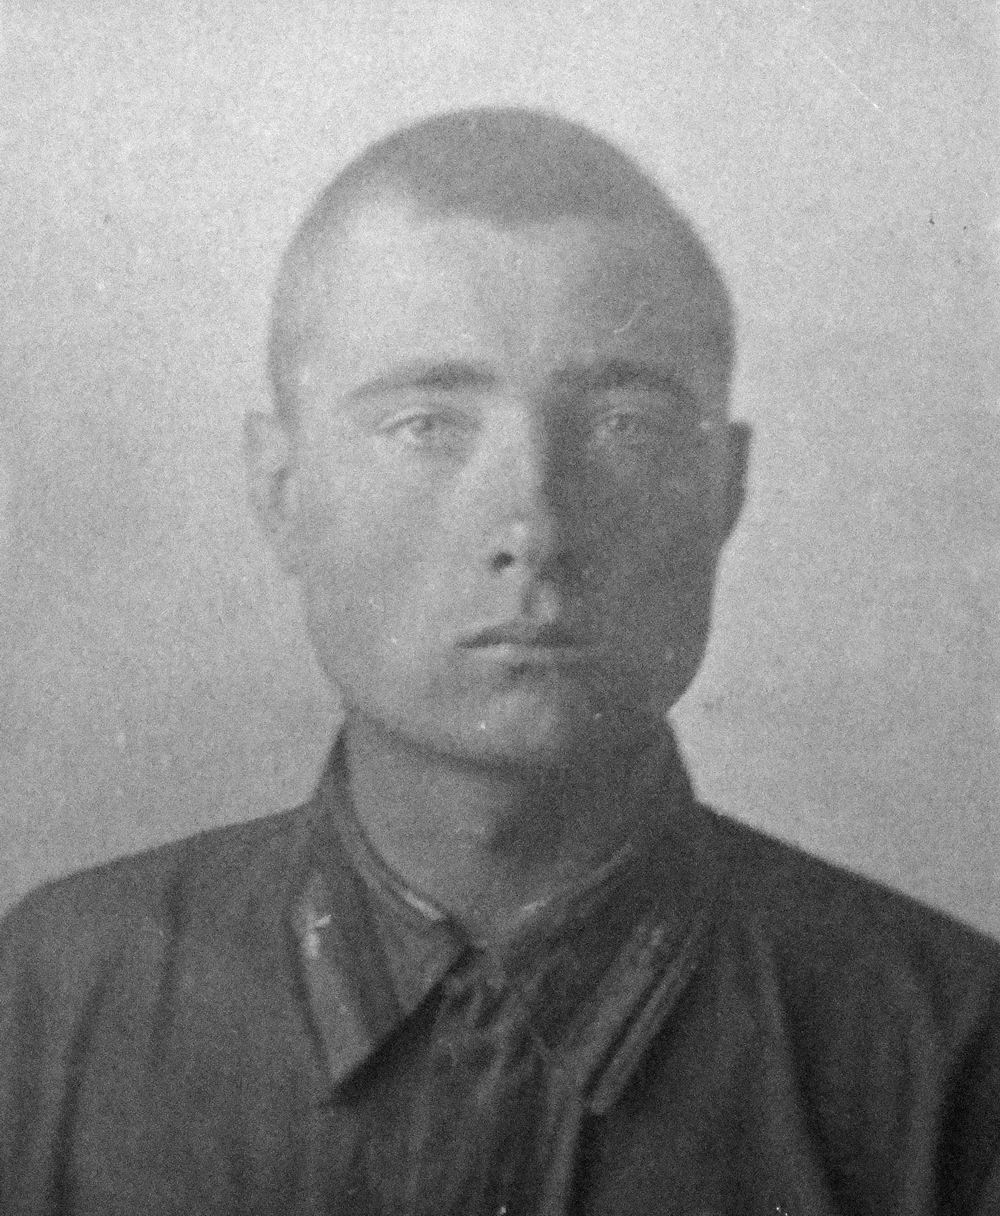 Младший лейтенант ВОДЯНИКОВ Виктор Григорьевич.